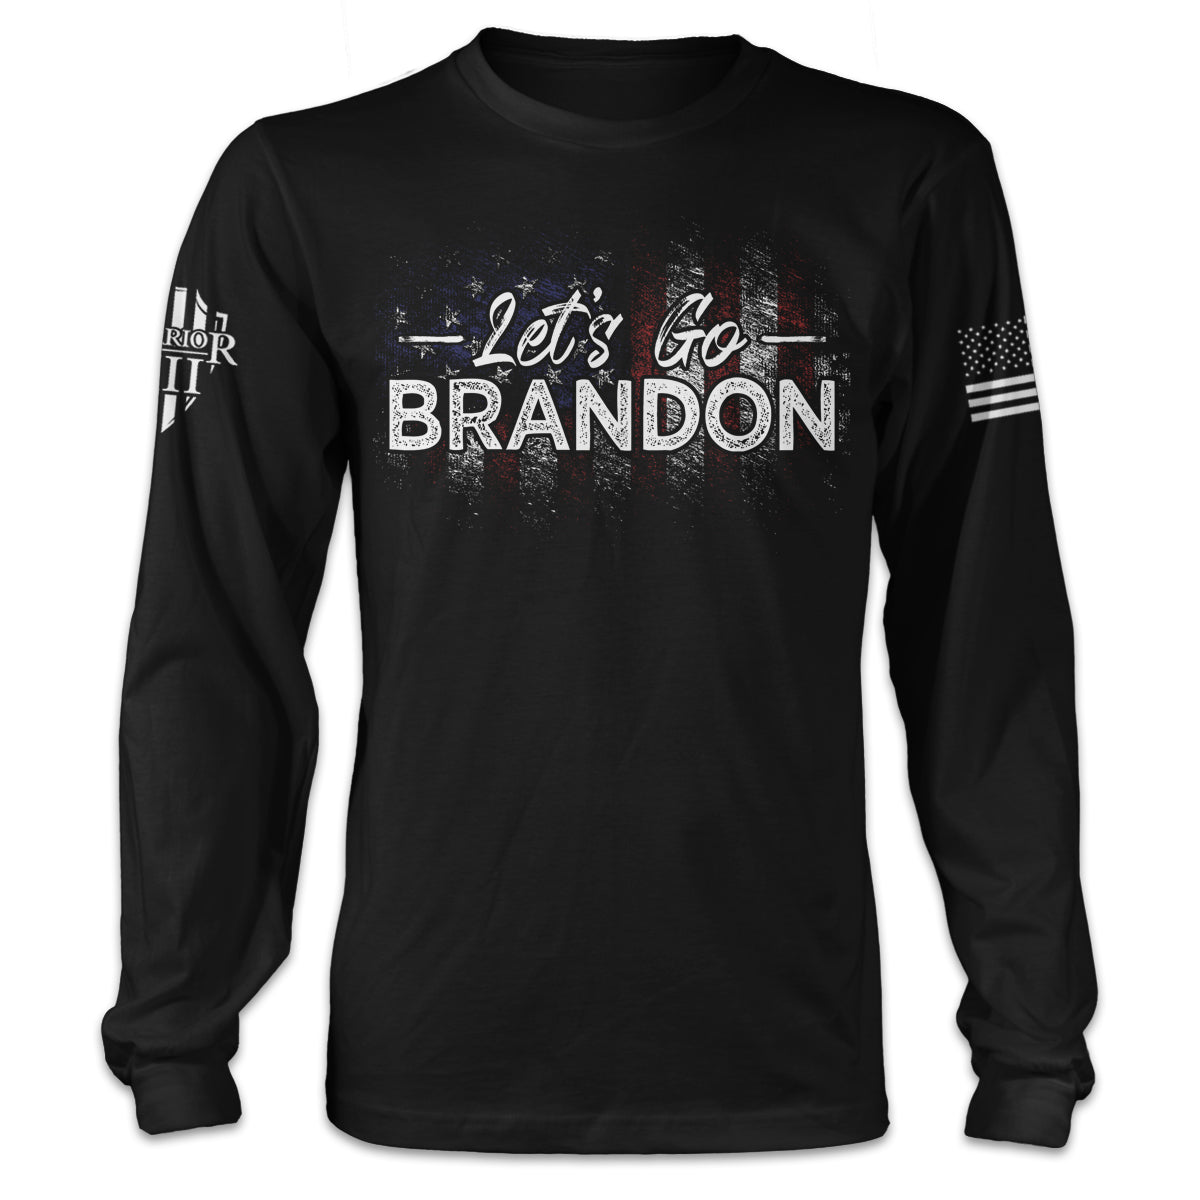 I Love Brandon - Love - Long Sleeve T-Shirt